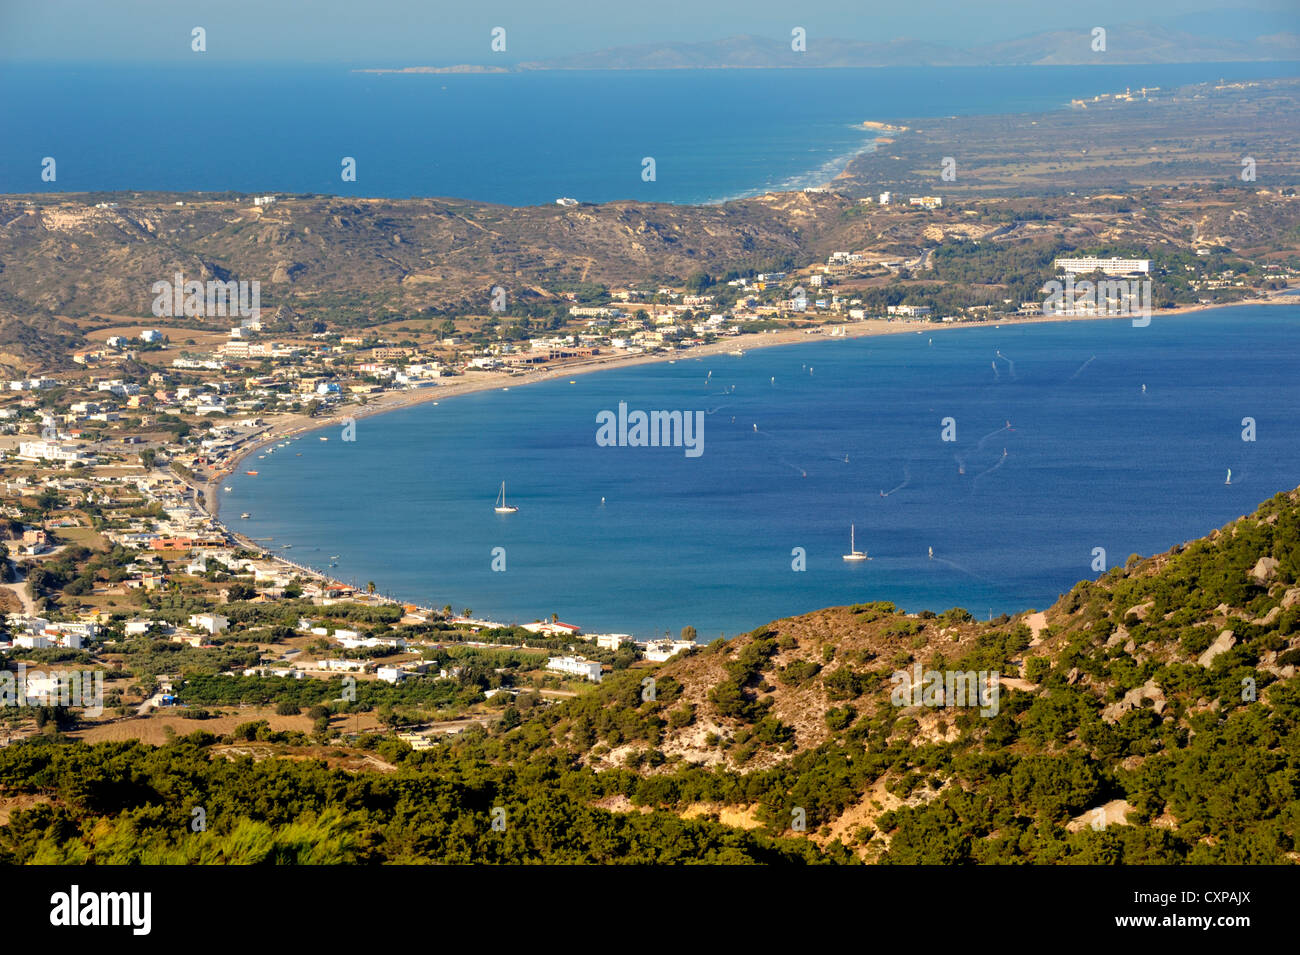 Kamari bay, village of Kamari looking across isthmus of Kos Island to Kalimos Island, Greece Stock Photo